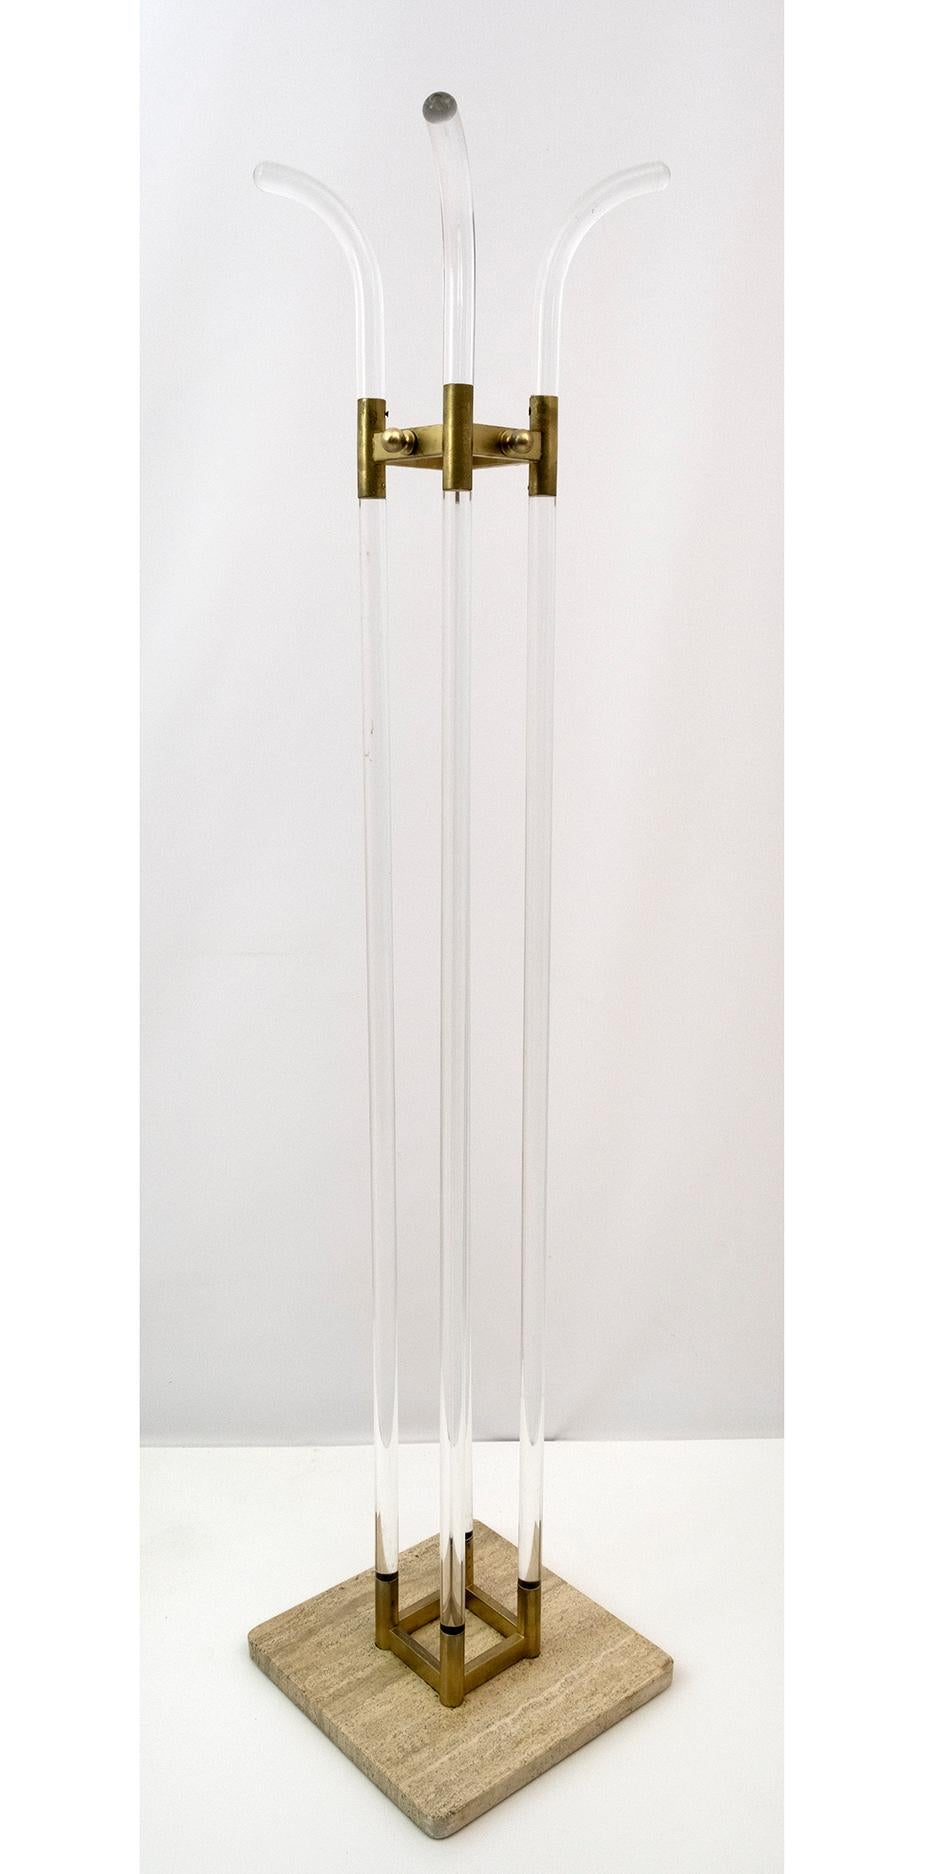 Minimalist coat hanger plexiglass, golden metal and travertine base, Italian production from the 1960s.